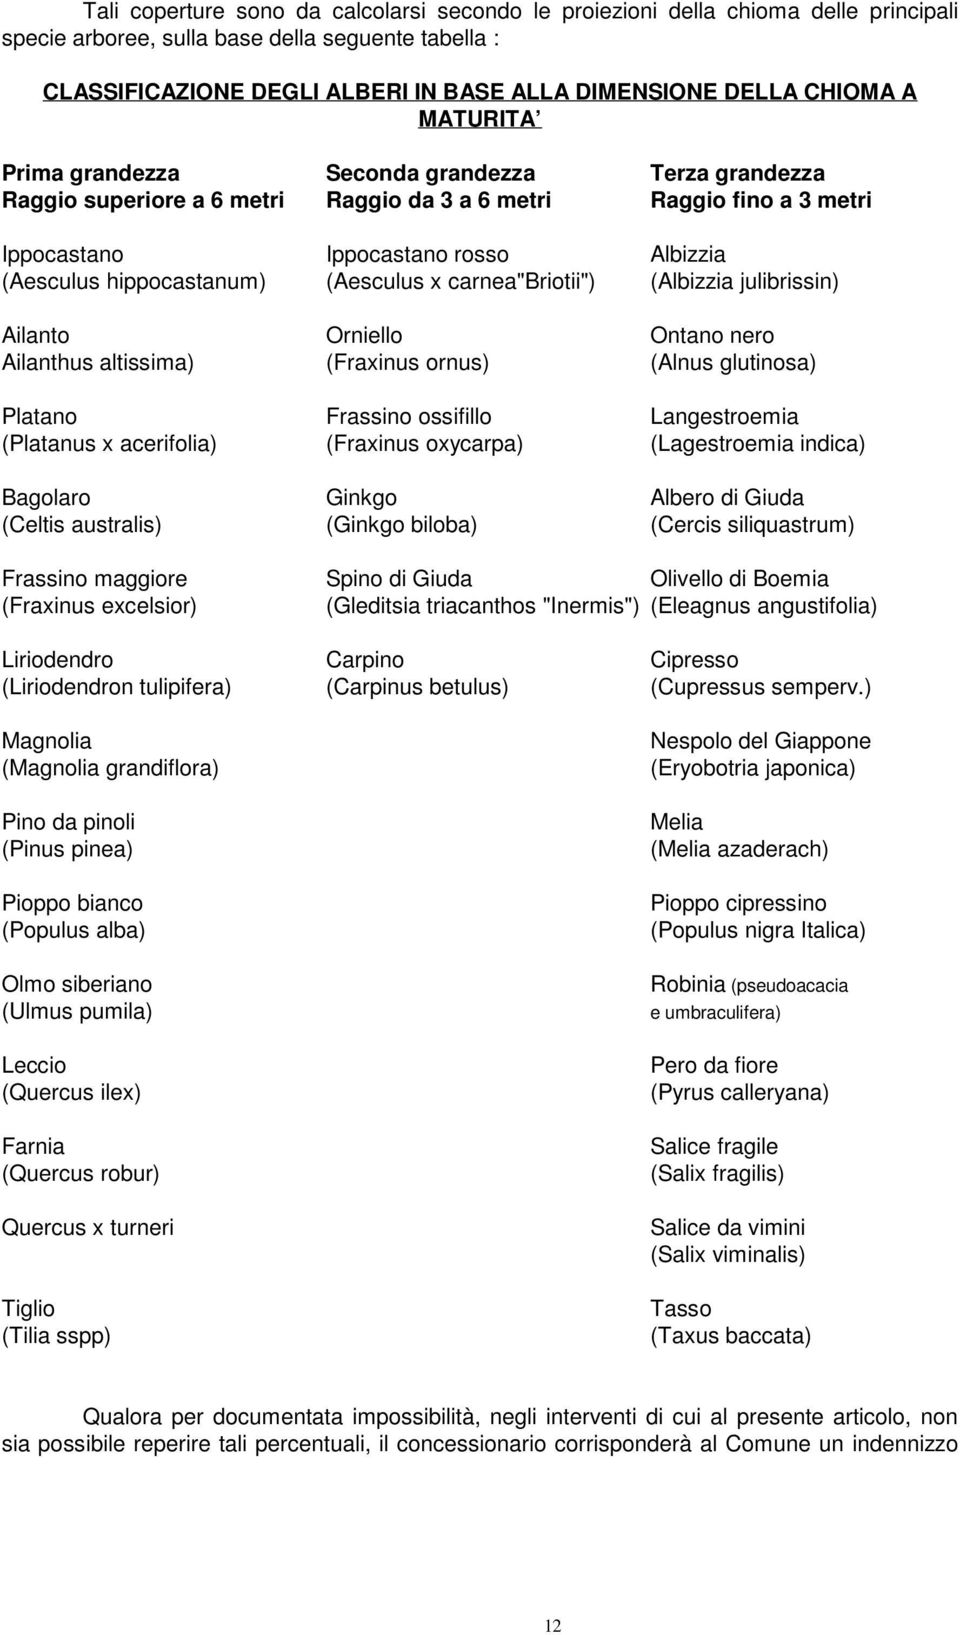 hippocastanum) (Aesculus x carnea"briotii") (Albizzia julibrissin) Ailanto Orniello Ontano nero Ailanthus altissima) (Fraxinus ornus) (Alnus glutinosa) Platano Frassino ossifillo Langestroemia